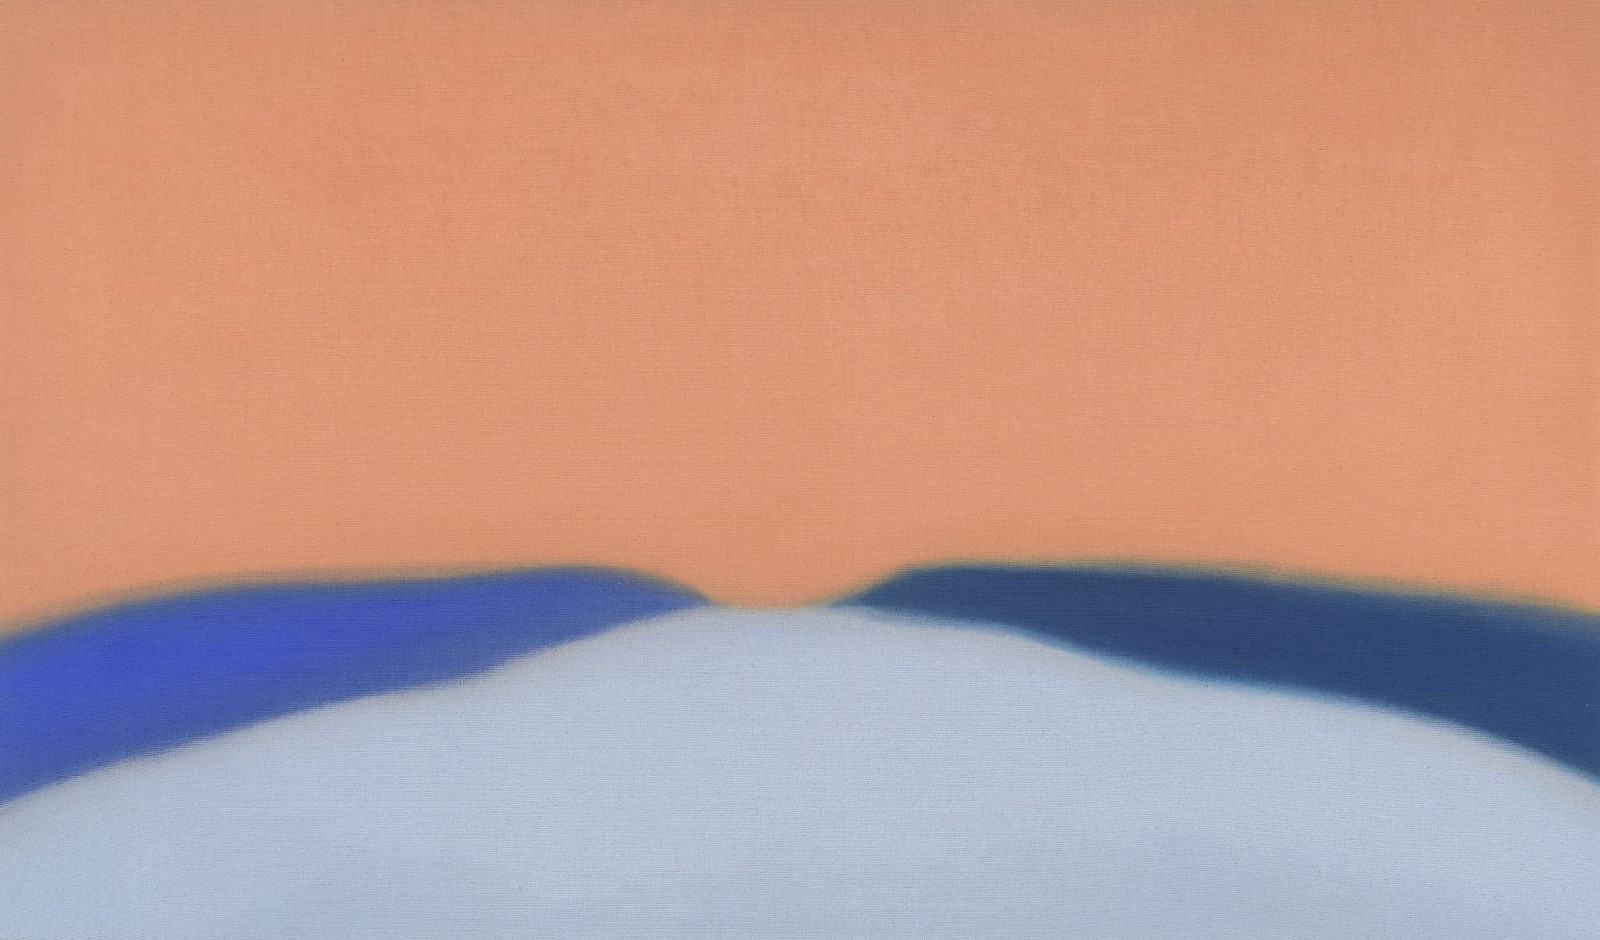 Susan Vecsey, Untitled (Hot Orange/Blue) | SOLD, 2018
Oil on linen, 40 x 68 in. (101.6 x 172.7 cm)
VEC-00148